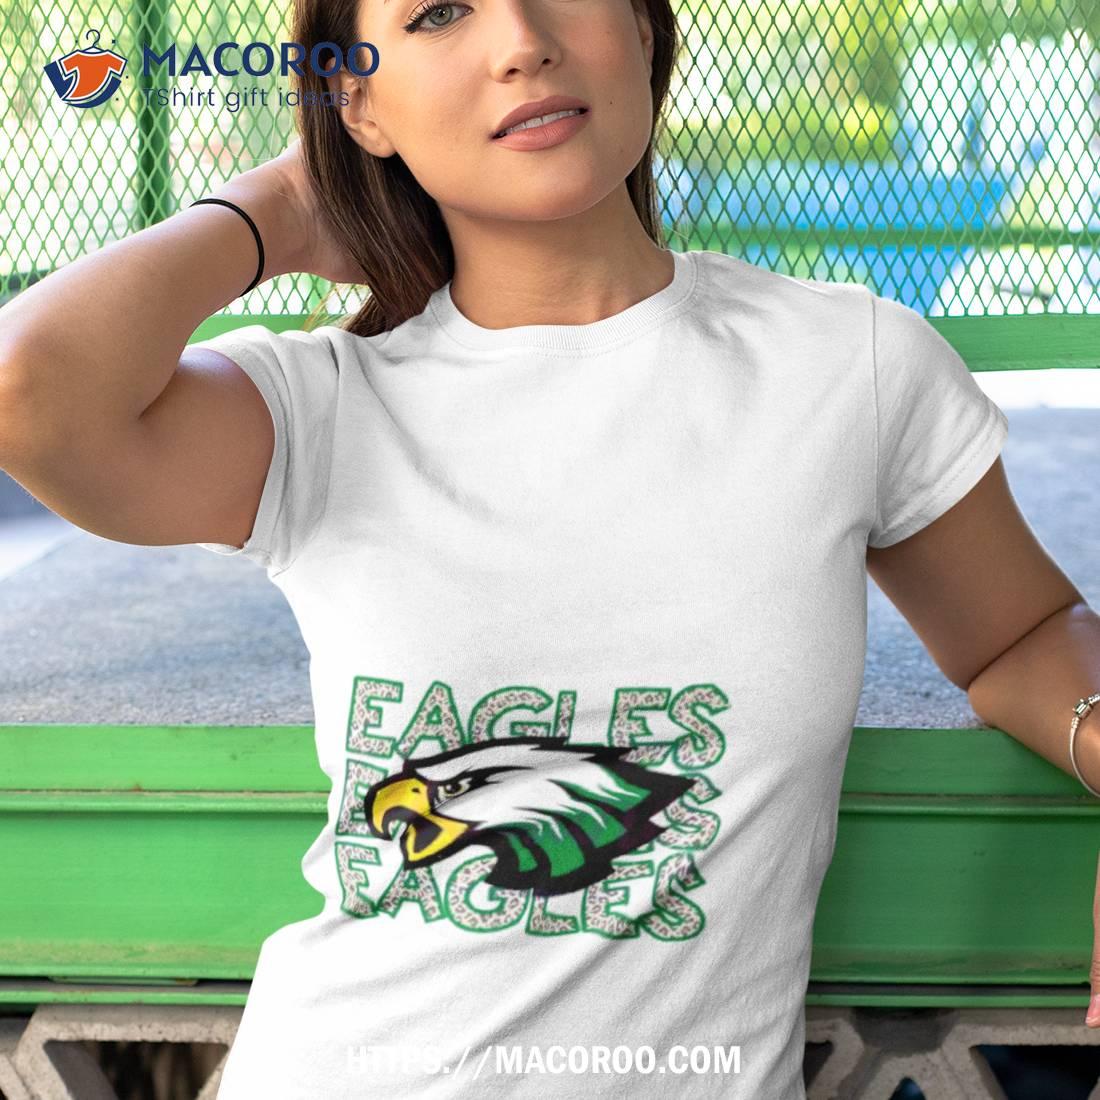 football eagles shirt